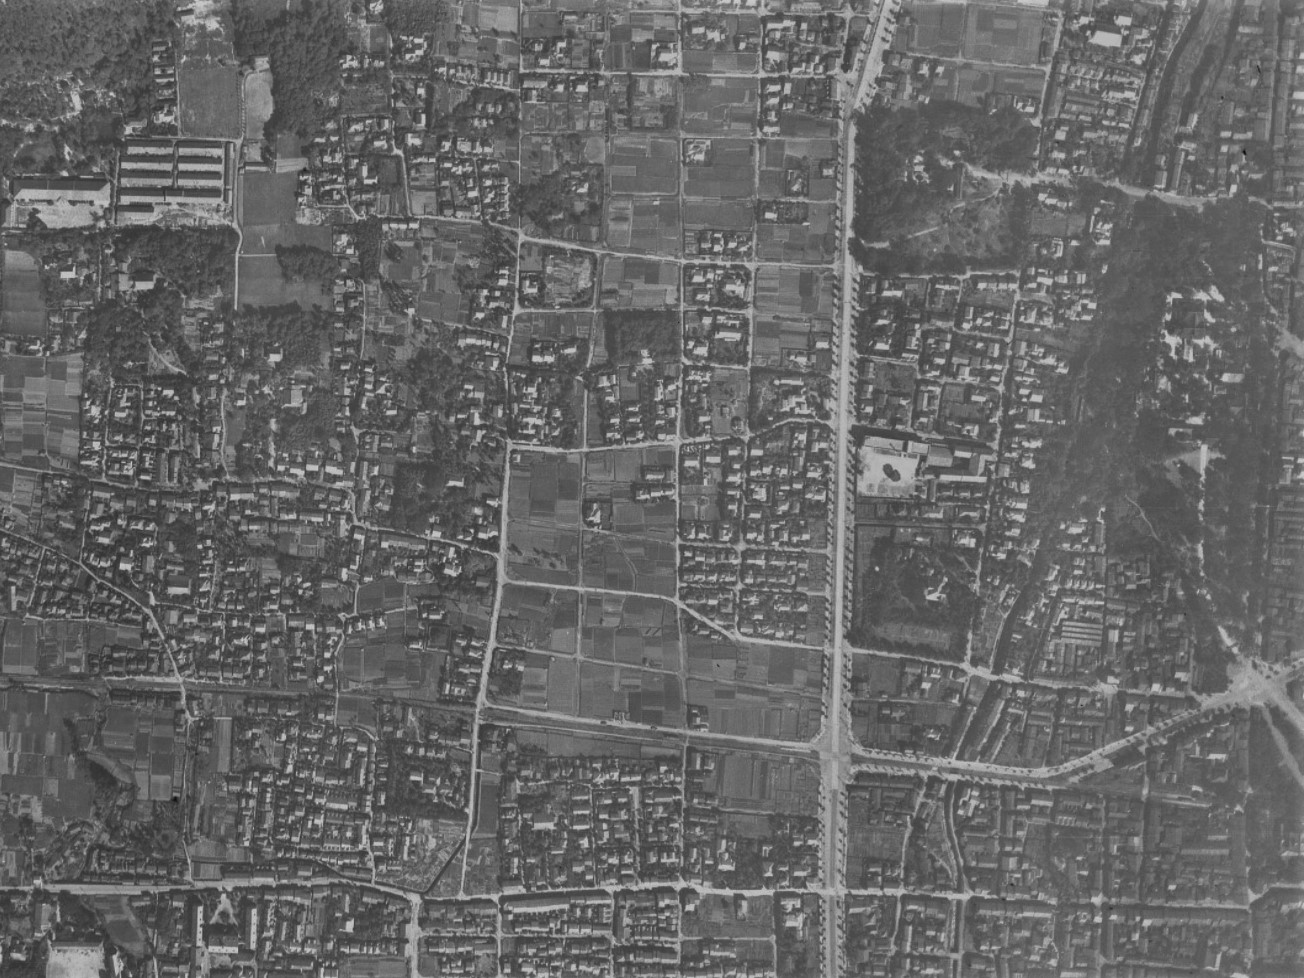 水野男爵家平野八丁柳町邸跡、昭和21年撮影空中写真（国土地理院Webサイトより、USA-R275-A-7-61〔部分〕）の画像。